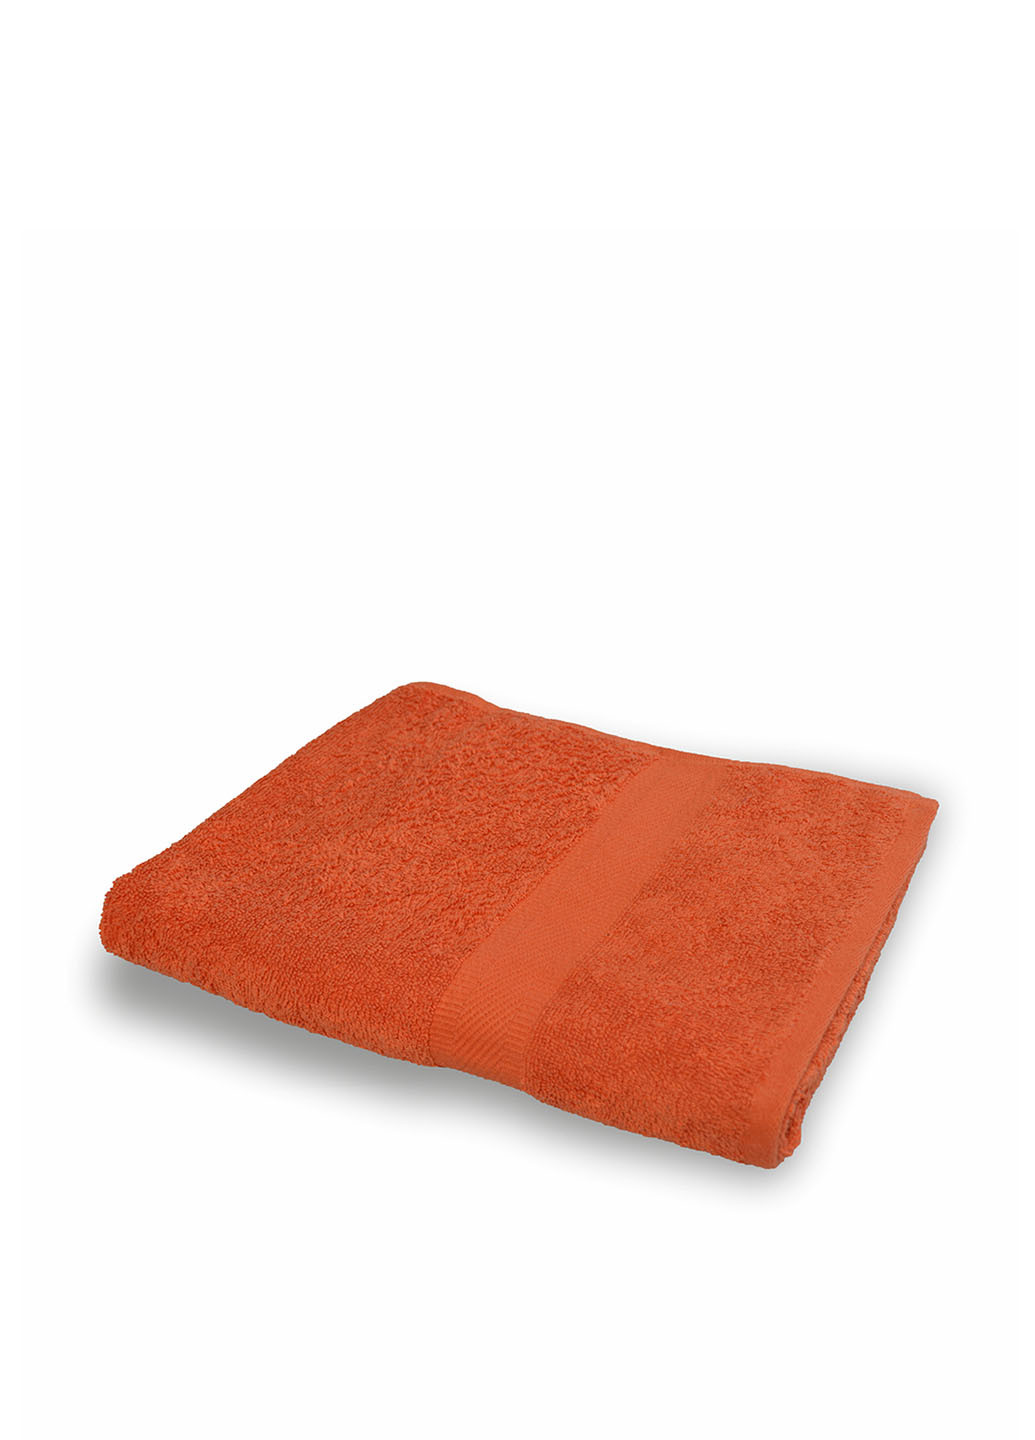 Life style полотенце, 70х140 см однотонный оранжевый производство - Индия